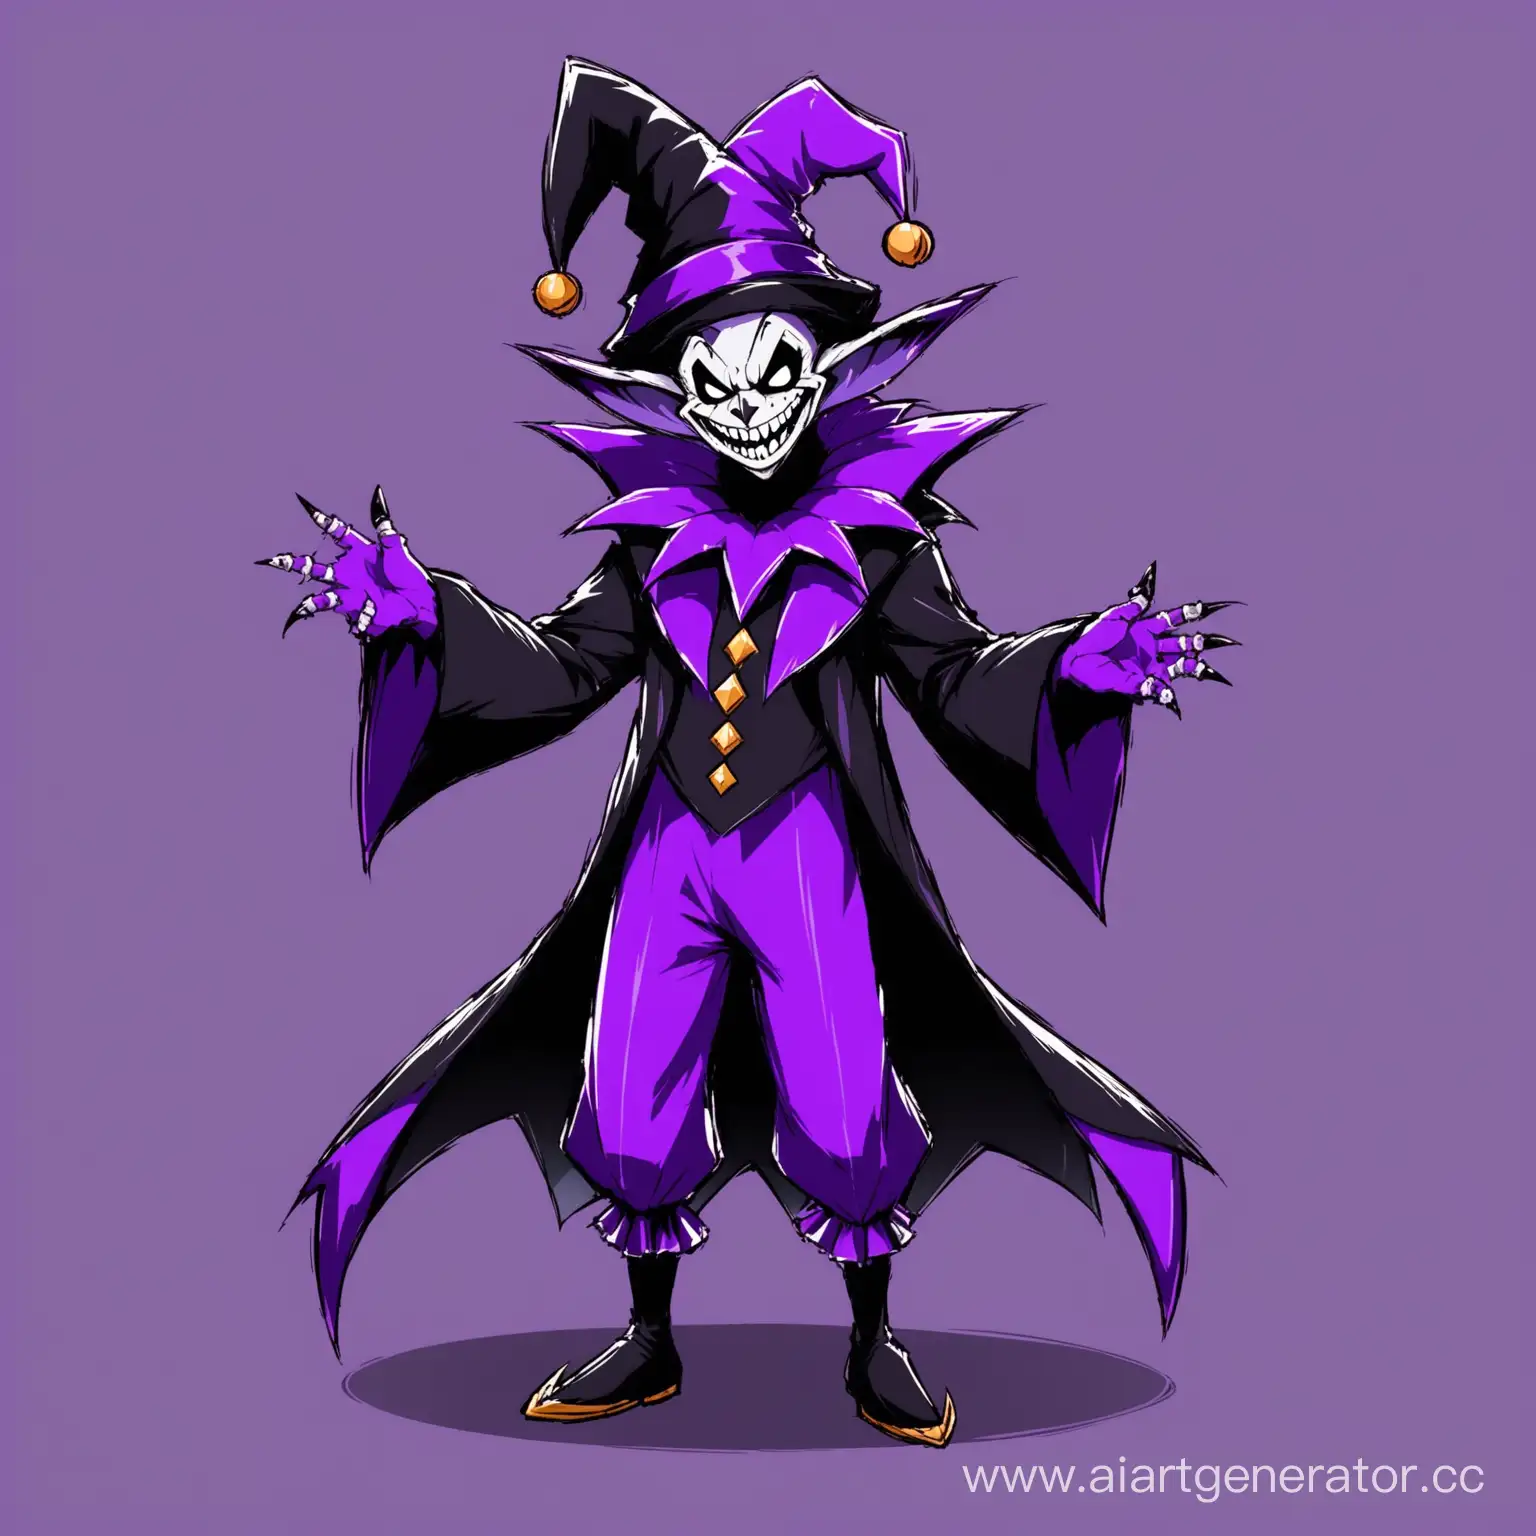 Jester-Jevil-with-Light-BlueCray-Skin-in-Black-and-Dark-Purple-Attire